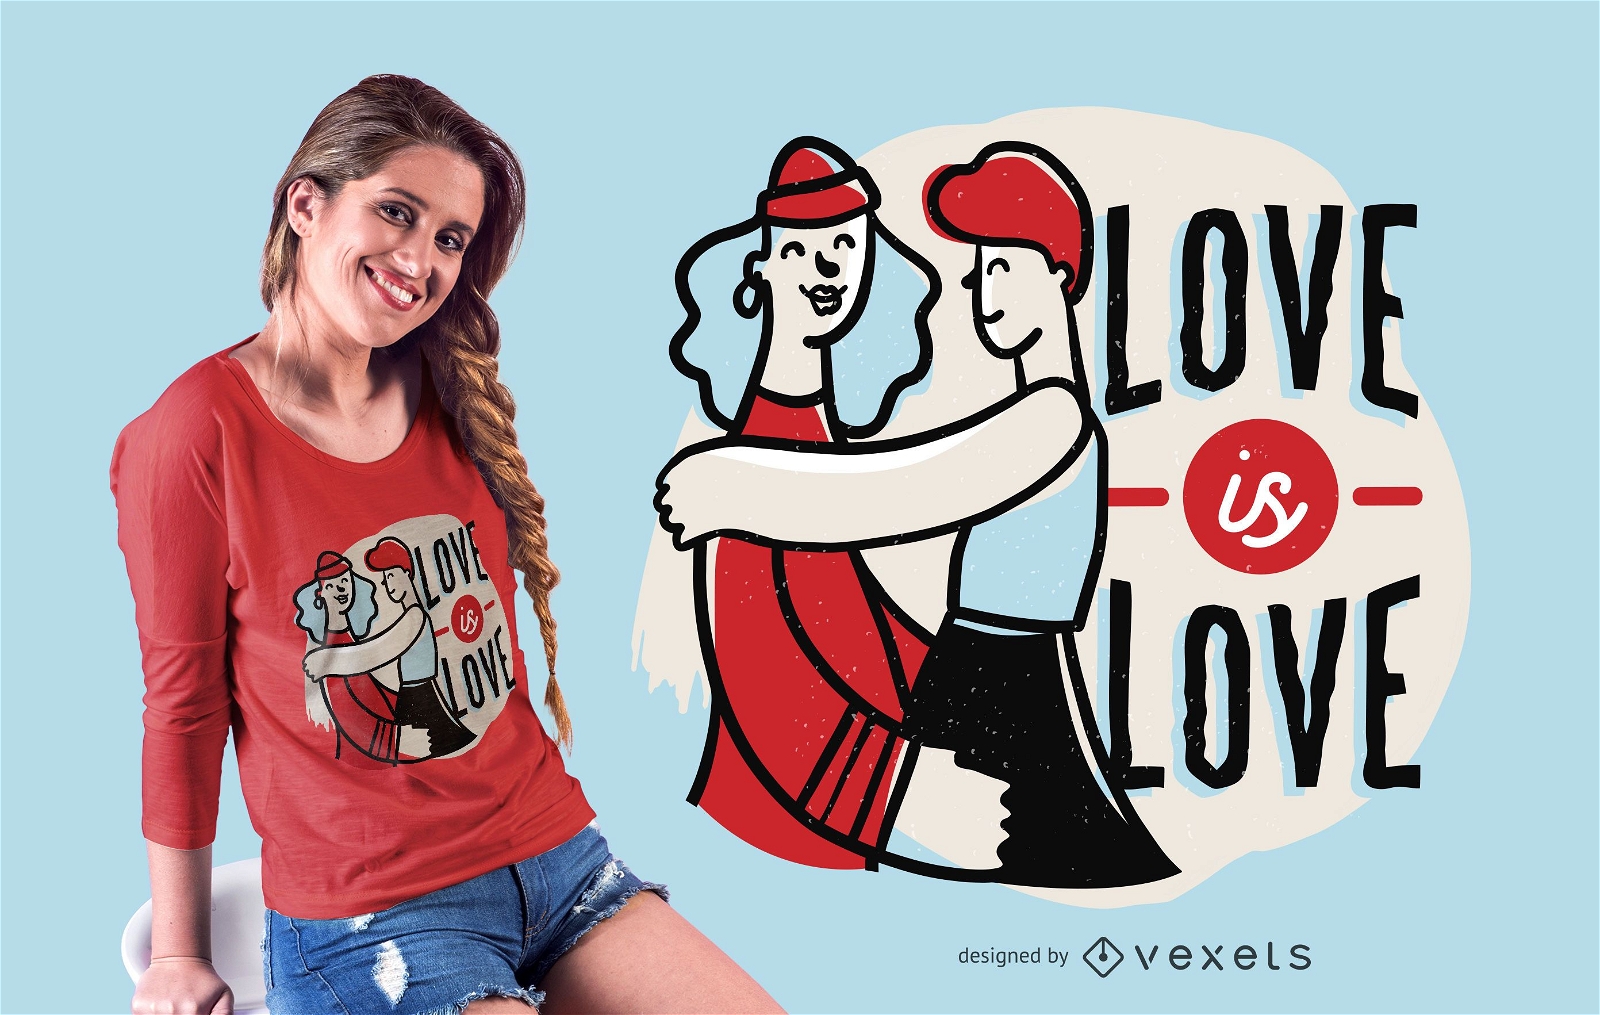 Love is love t-shirt design 